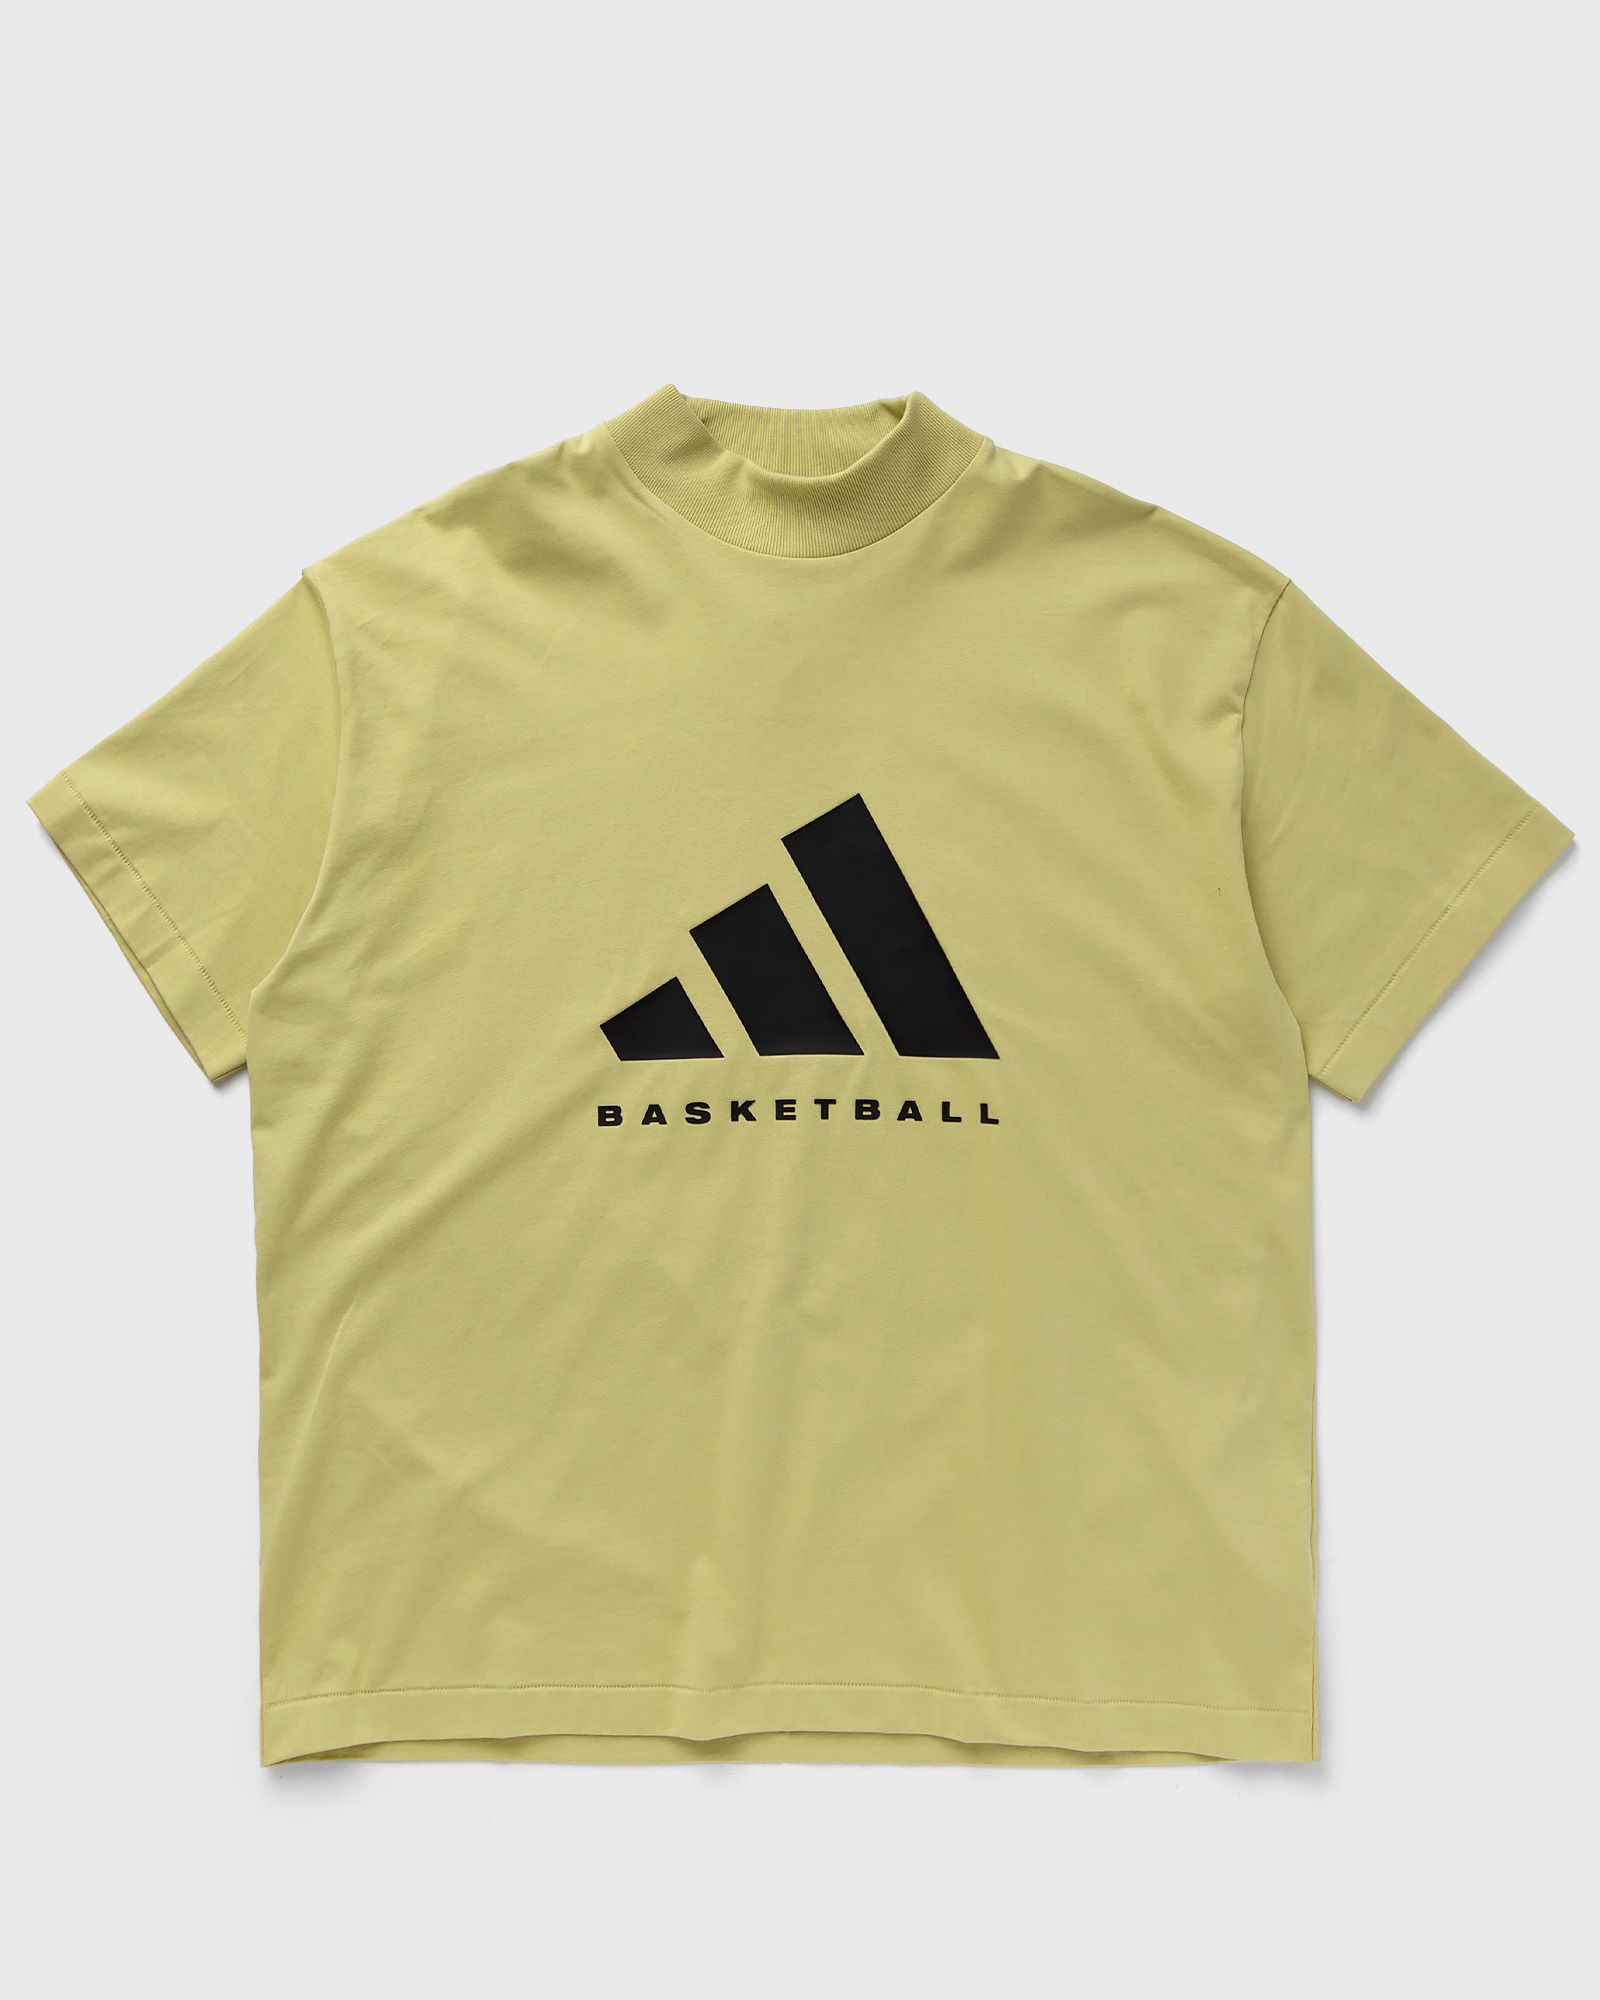 Adidas - basketball cotton jersey tee men shortsleeves yellow in größe:l